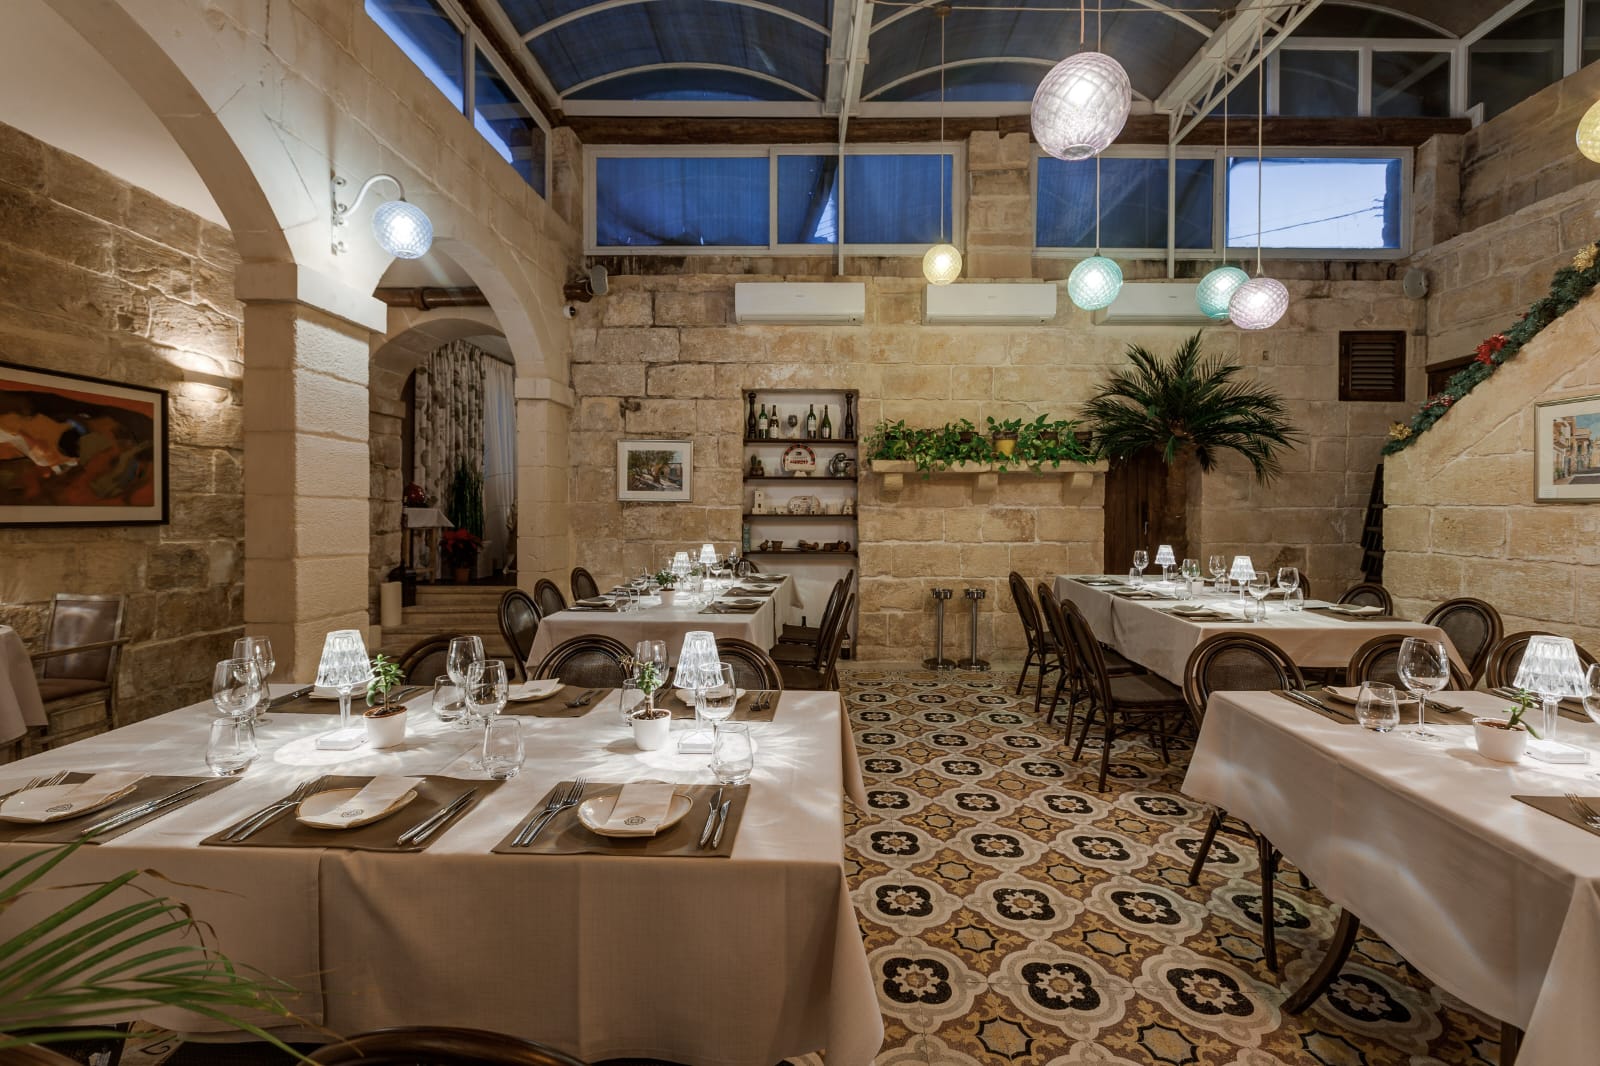 Madliena lodge - restaurants in Malta